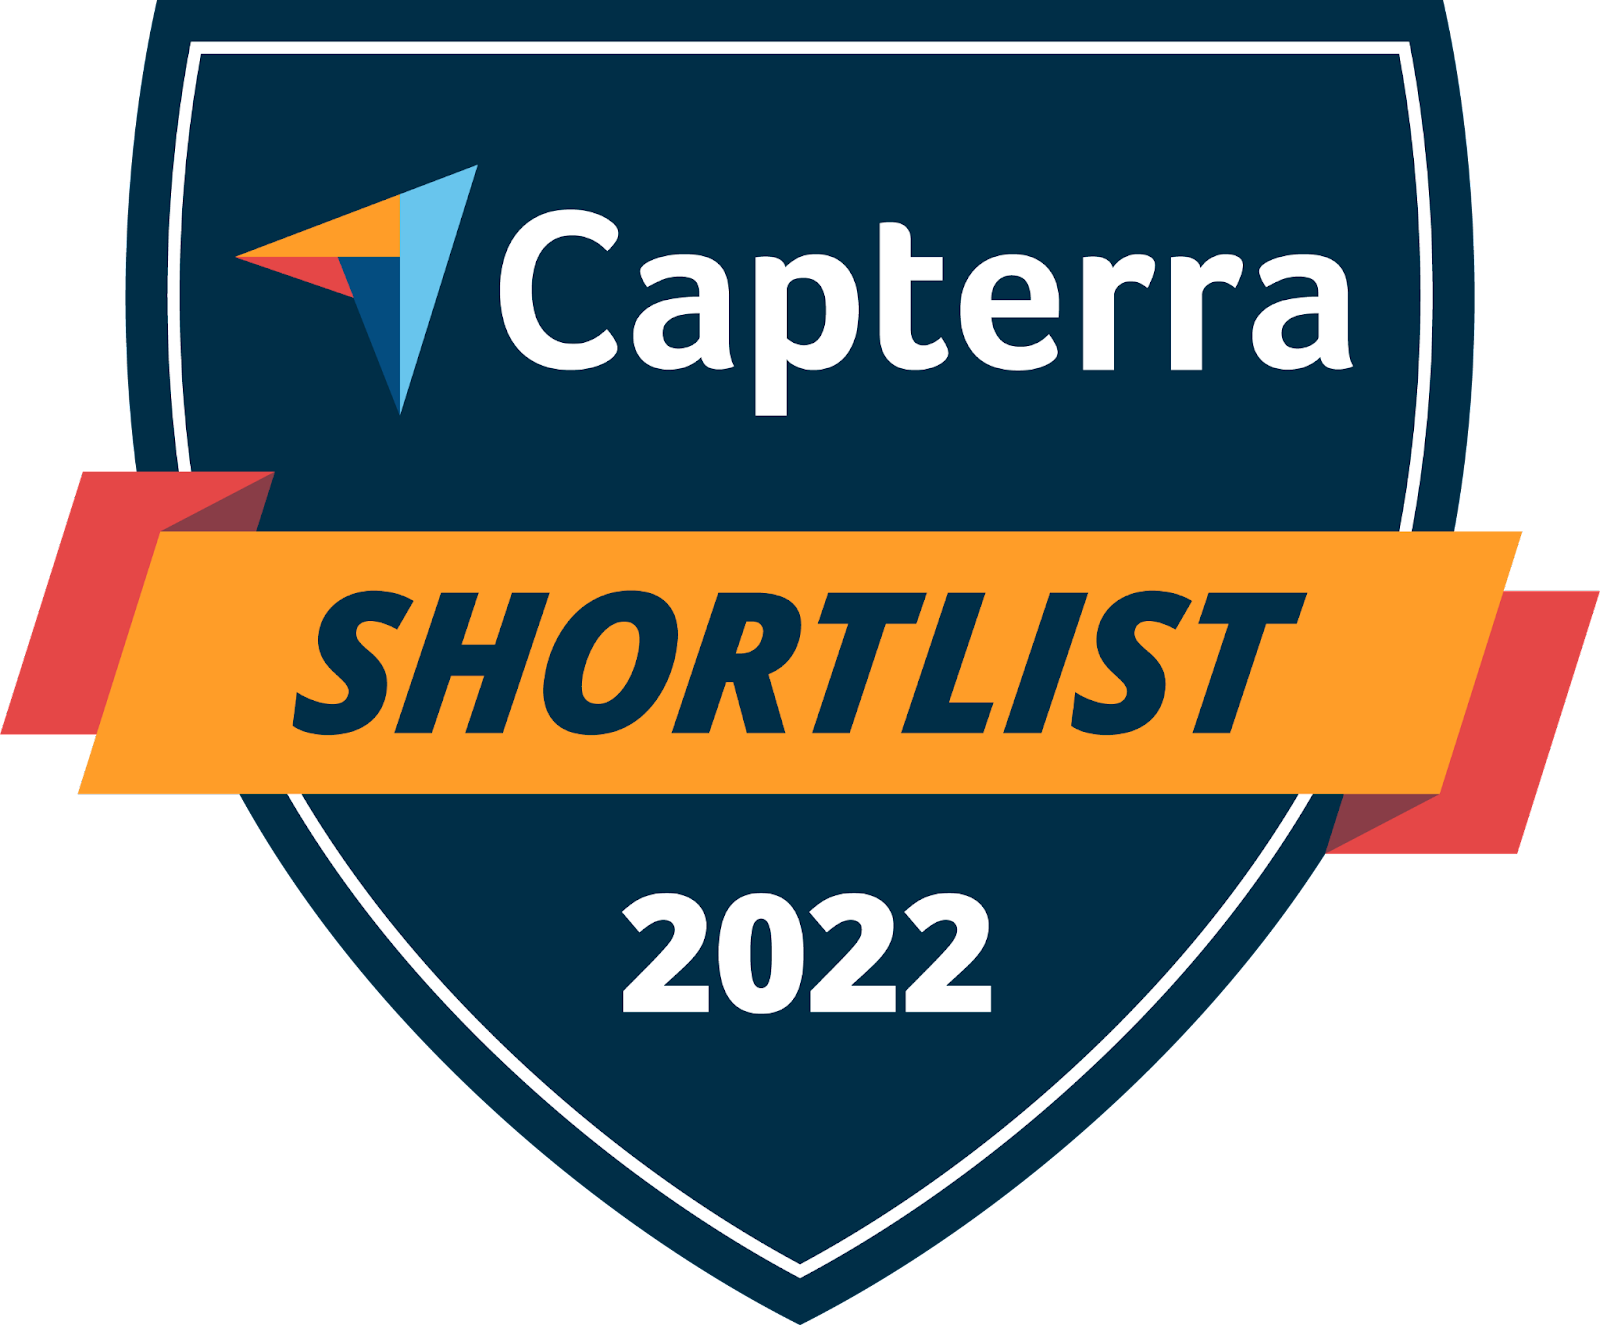 Capterra badge for Shortlist 2022